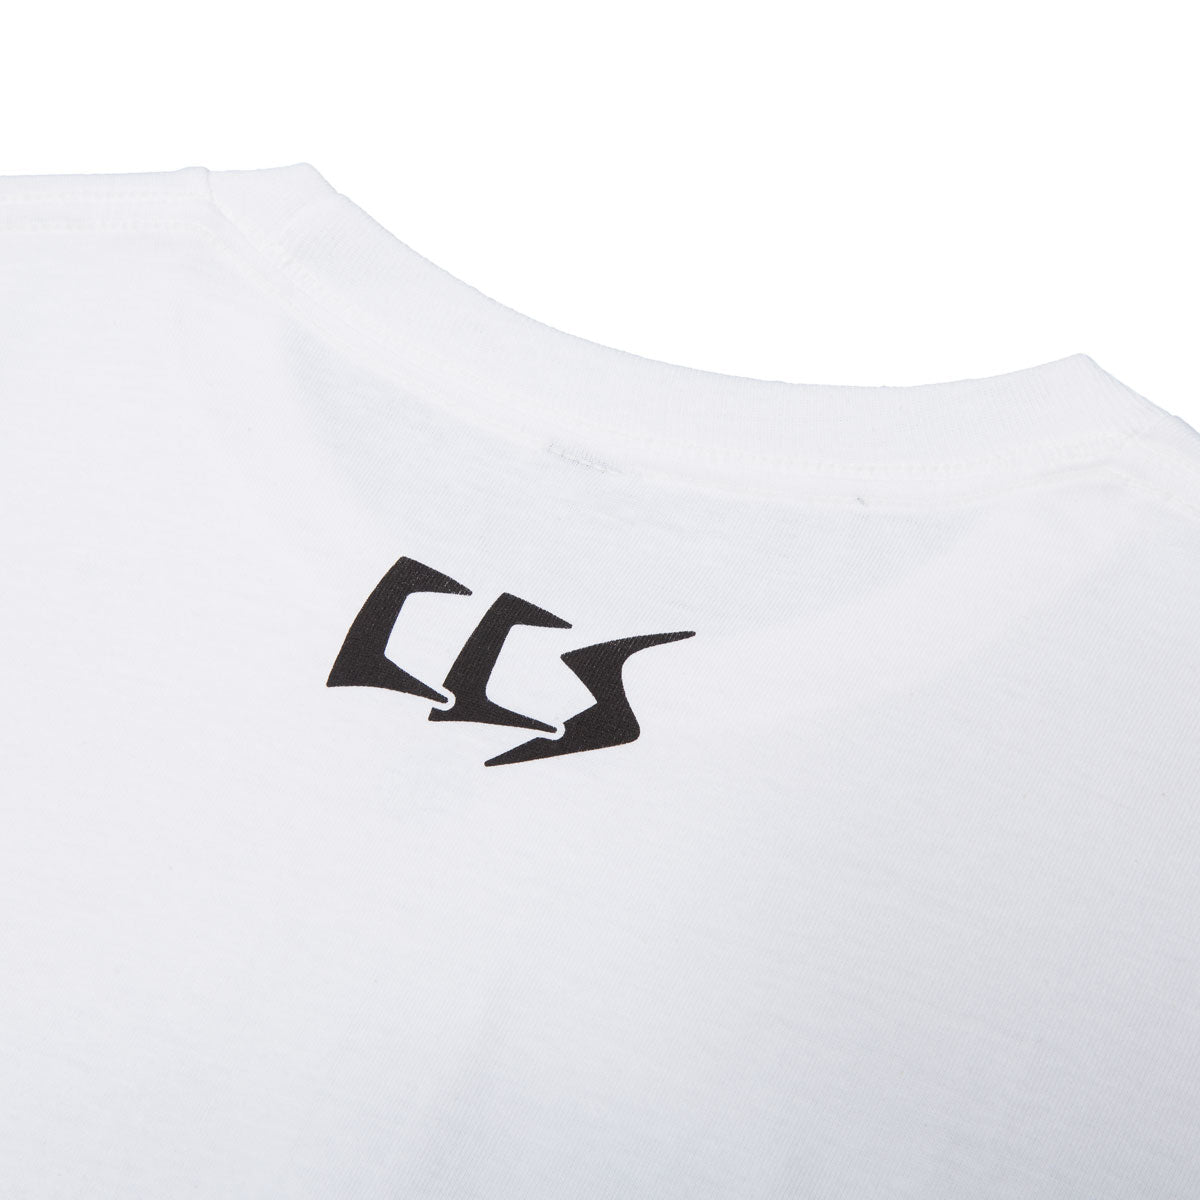 CCS OG Punk T-Shirt - White/Blue image 4